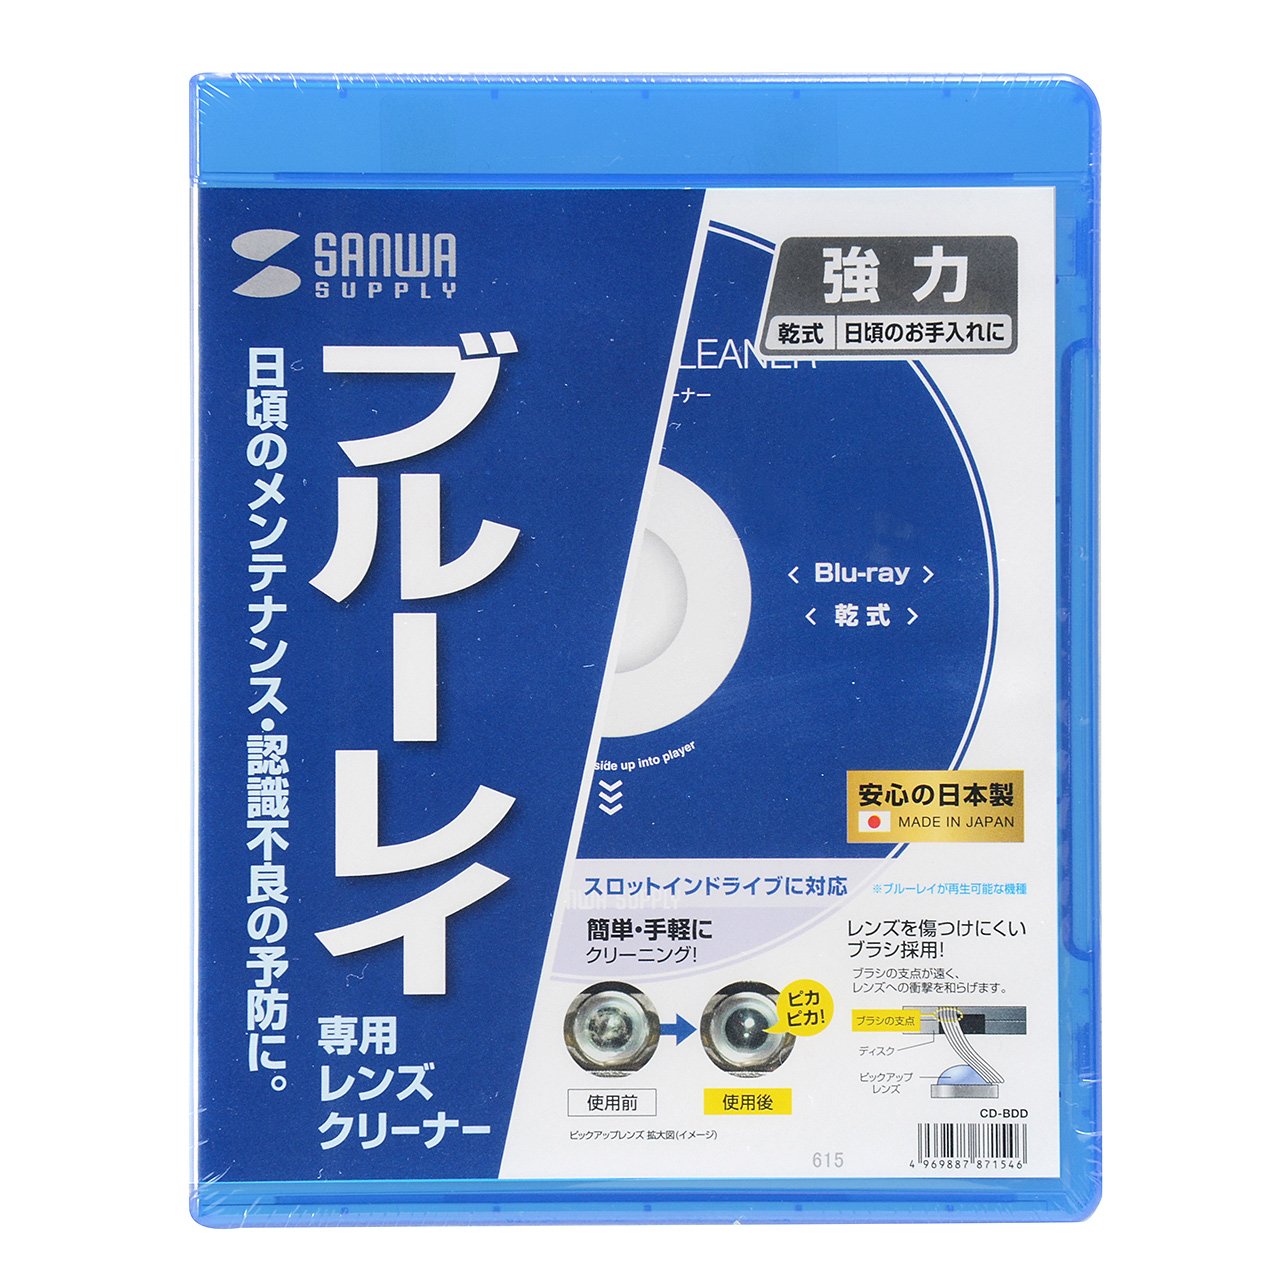 TTvC Blu-rayYN[i[() CD-BDD